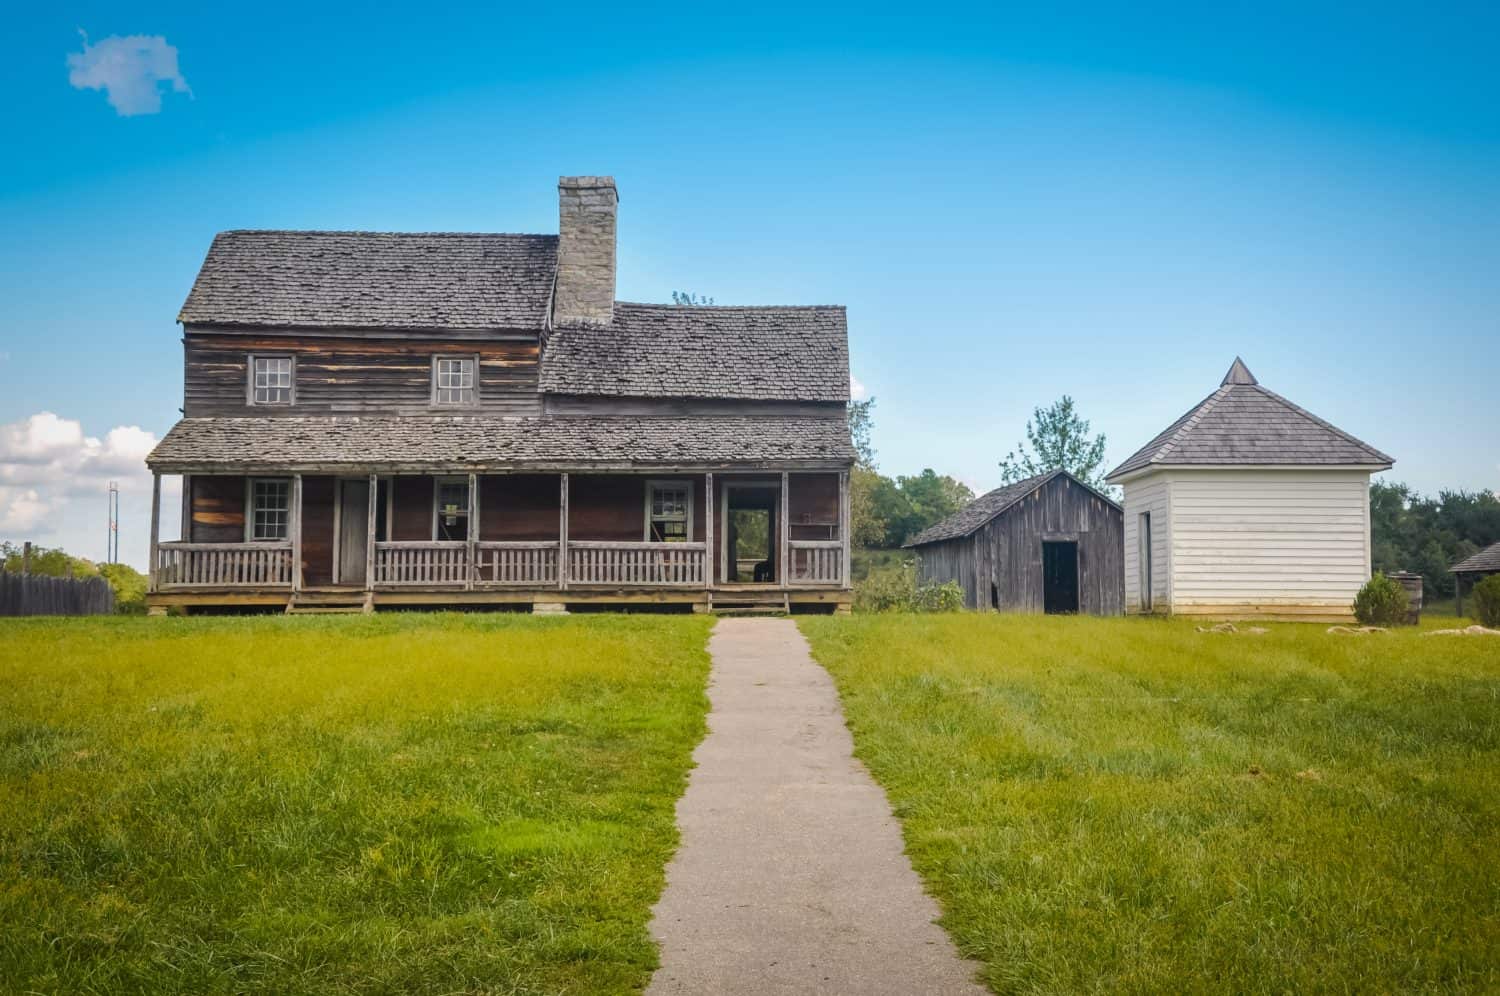 1850's American Farm - Frontier Culture Museum, VA